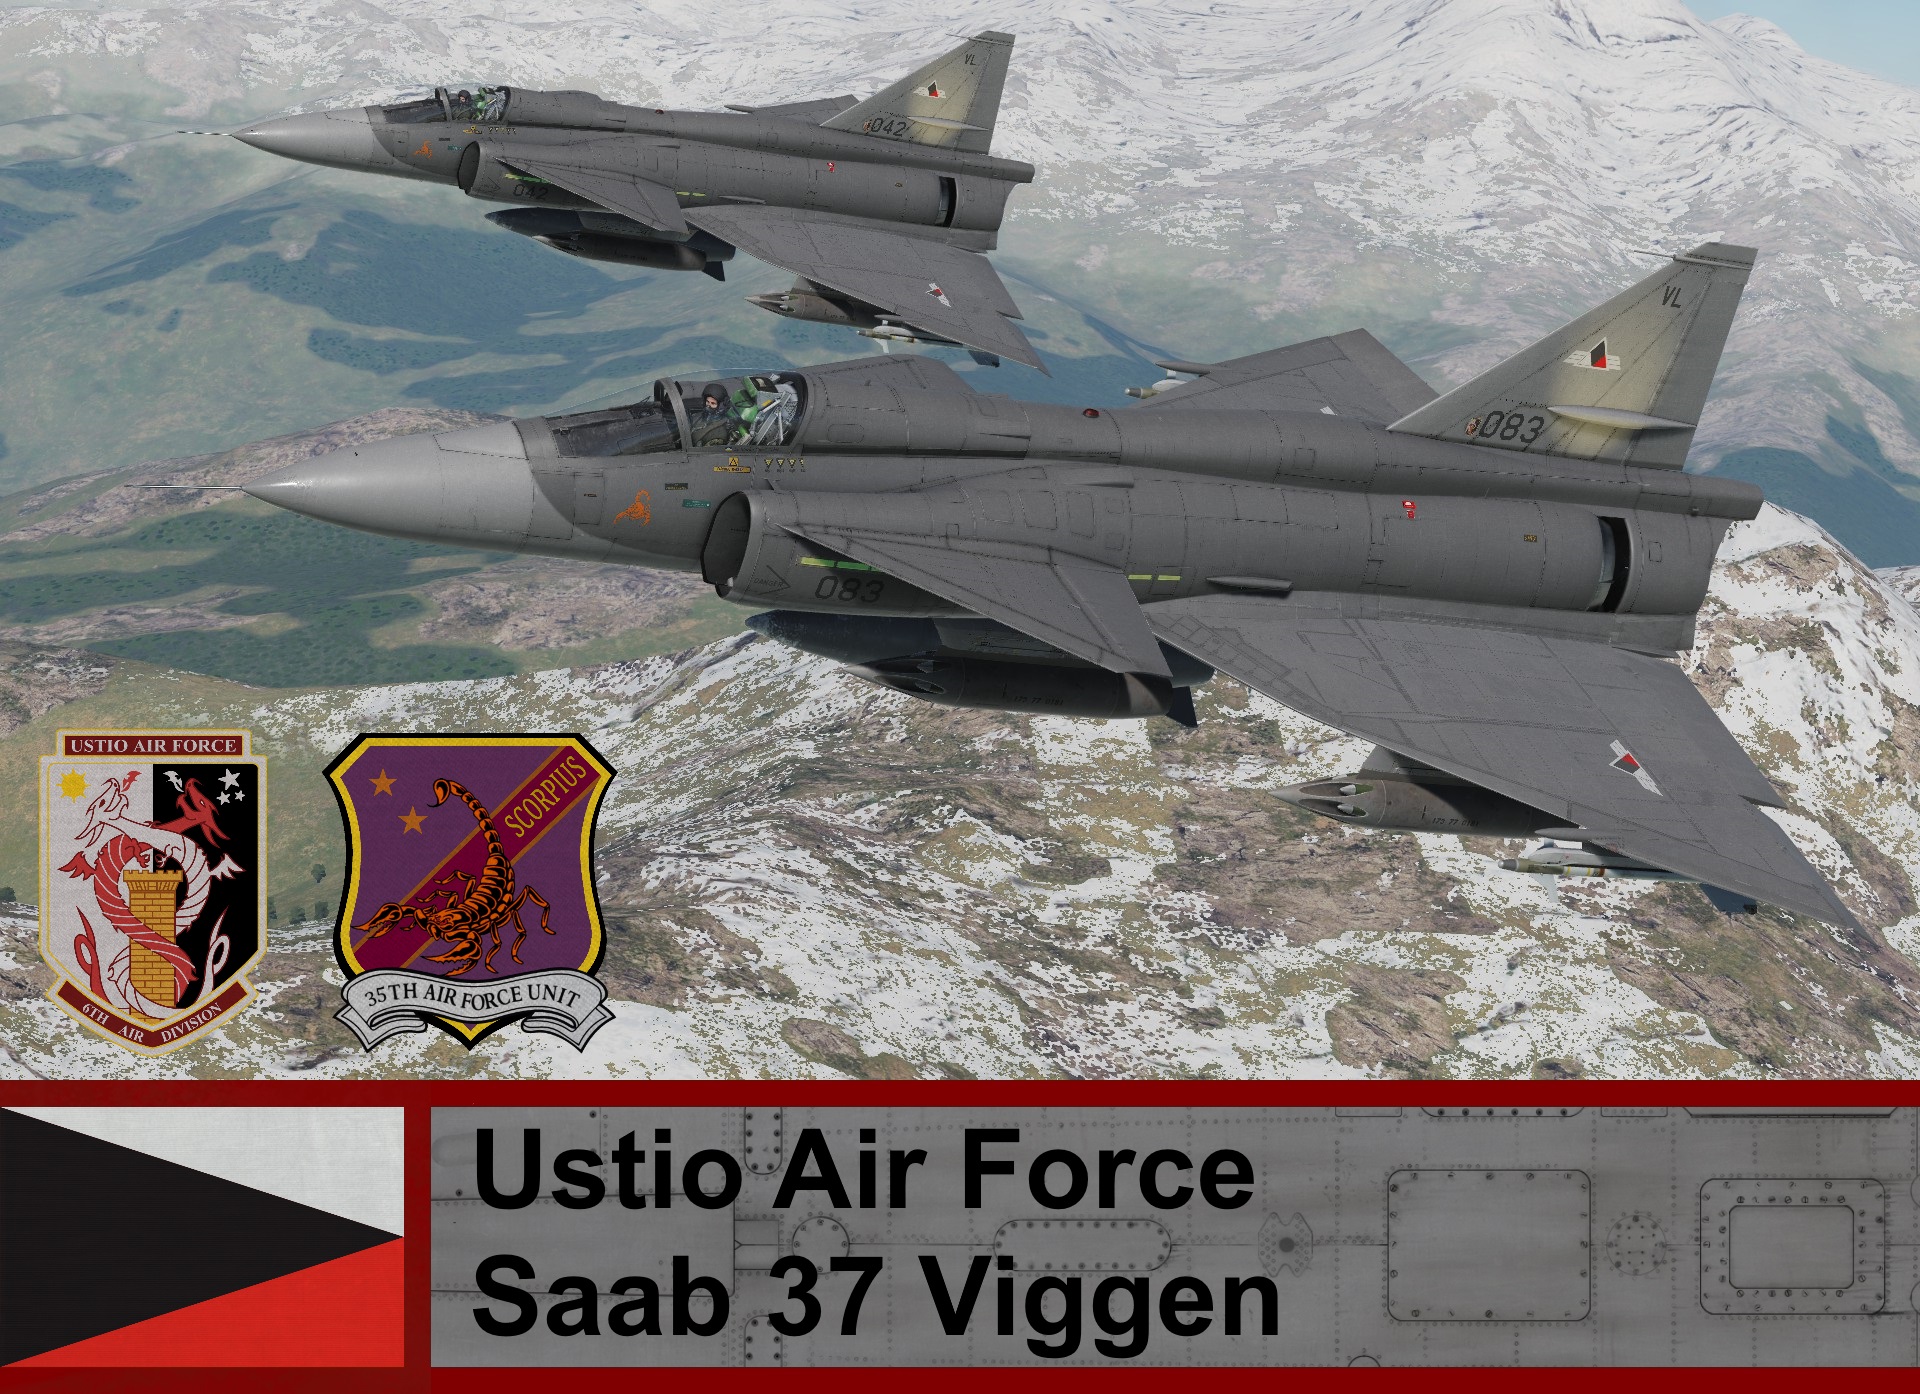 Ustio Air Force AJS-37 Viggen - Ace Combat Zero (35th AFU)